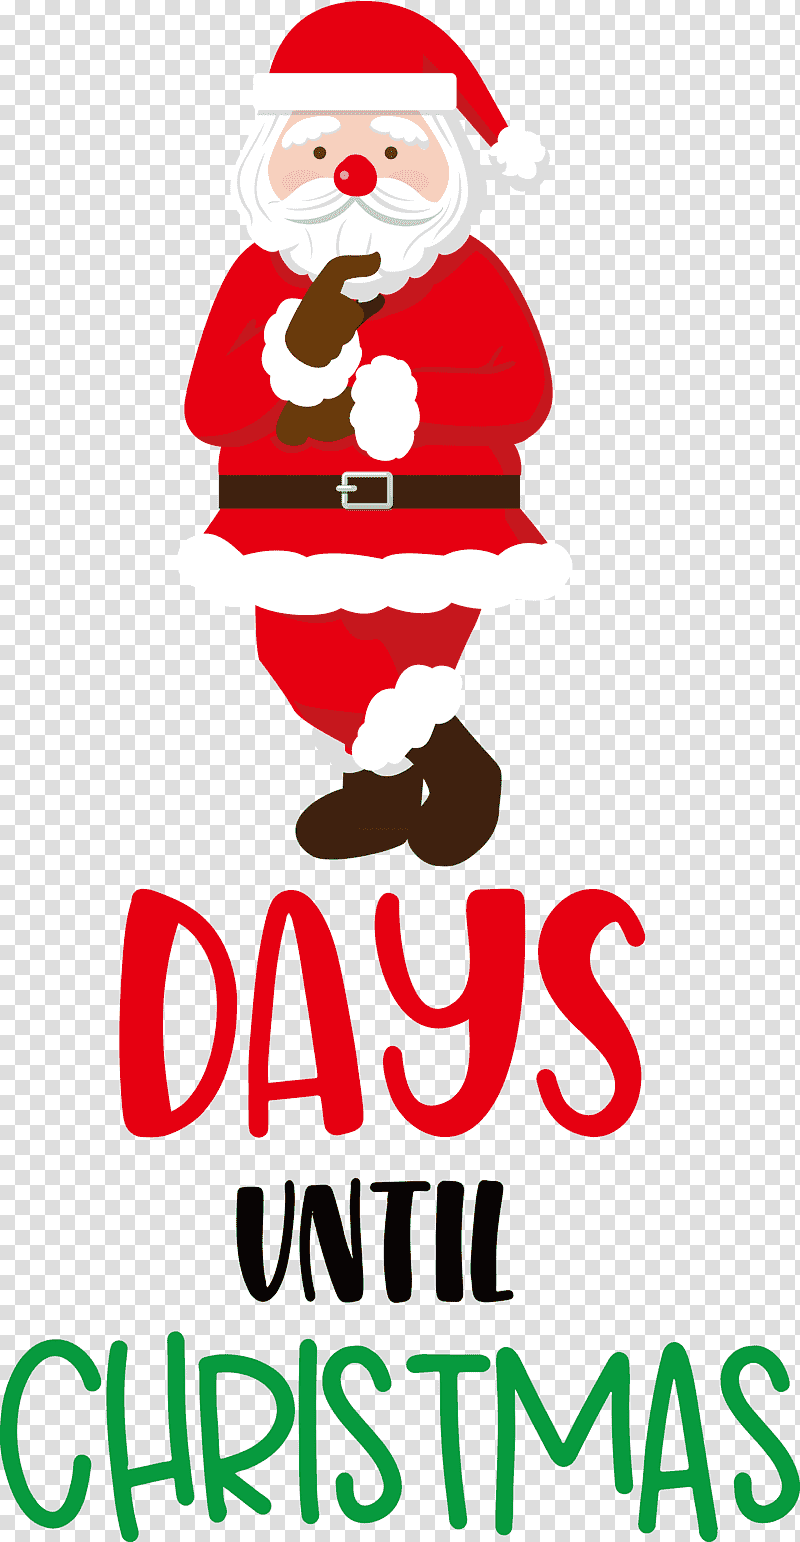 Days until Christmas Christmas Santa Claus, Christmas , Christmas Tree, Christmas Day, Holiday Ornament, Christmas Ornament, Logo transparent background PNG clipart